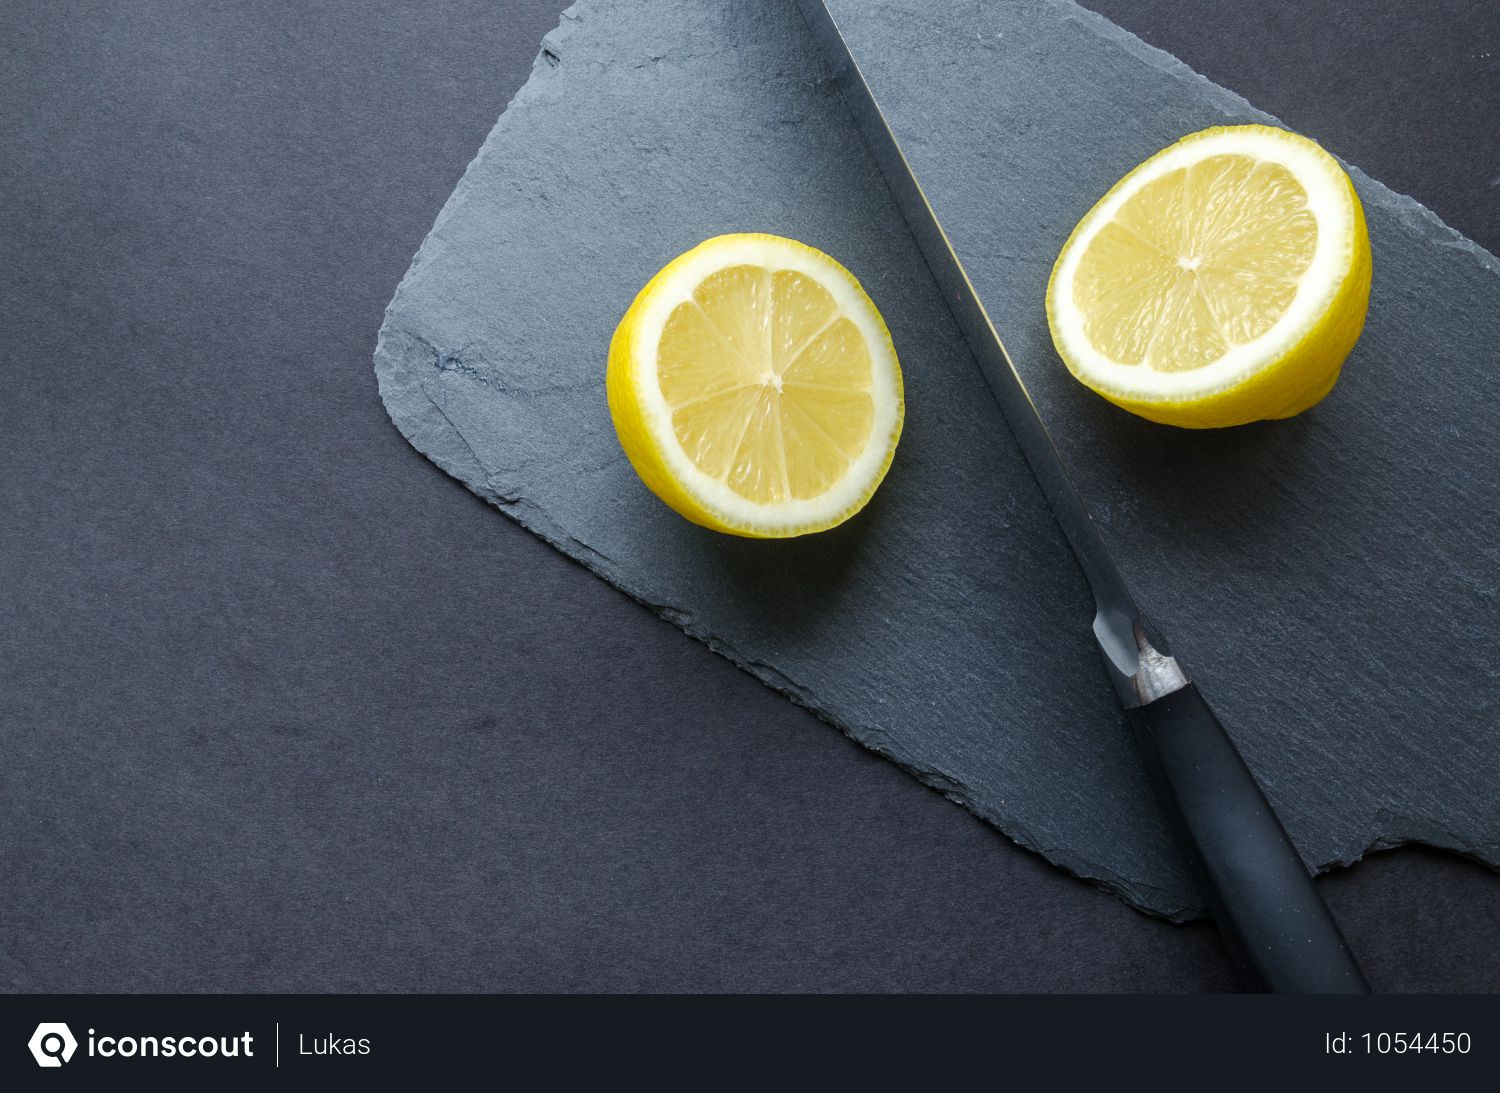 Free Sliced Lemon Photo download in PNG & JPG format